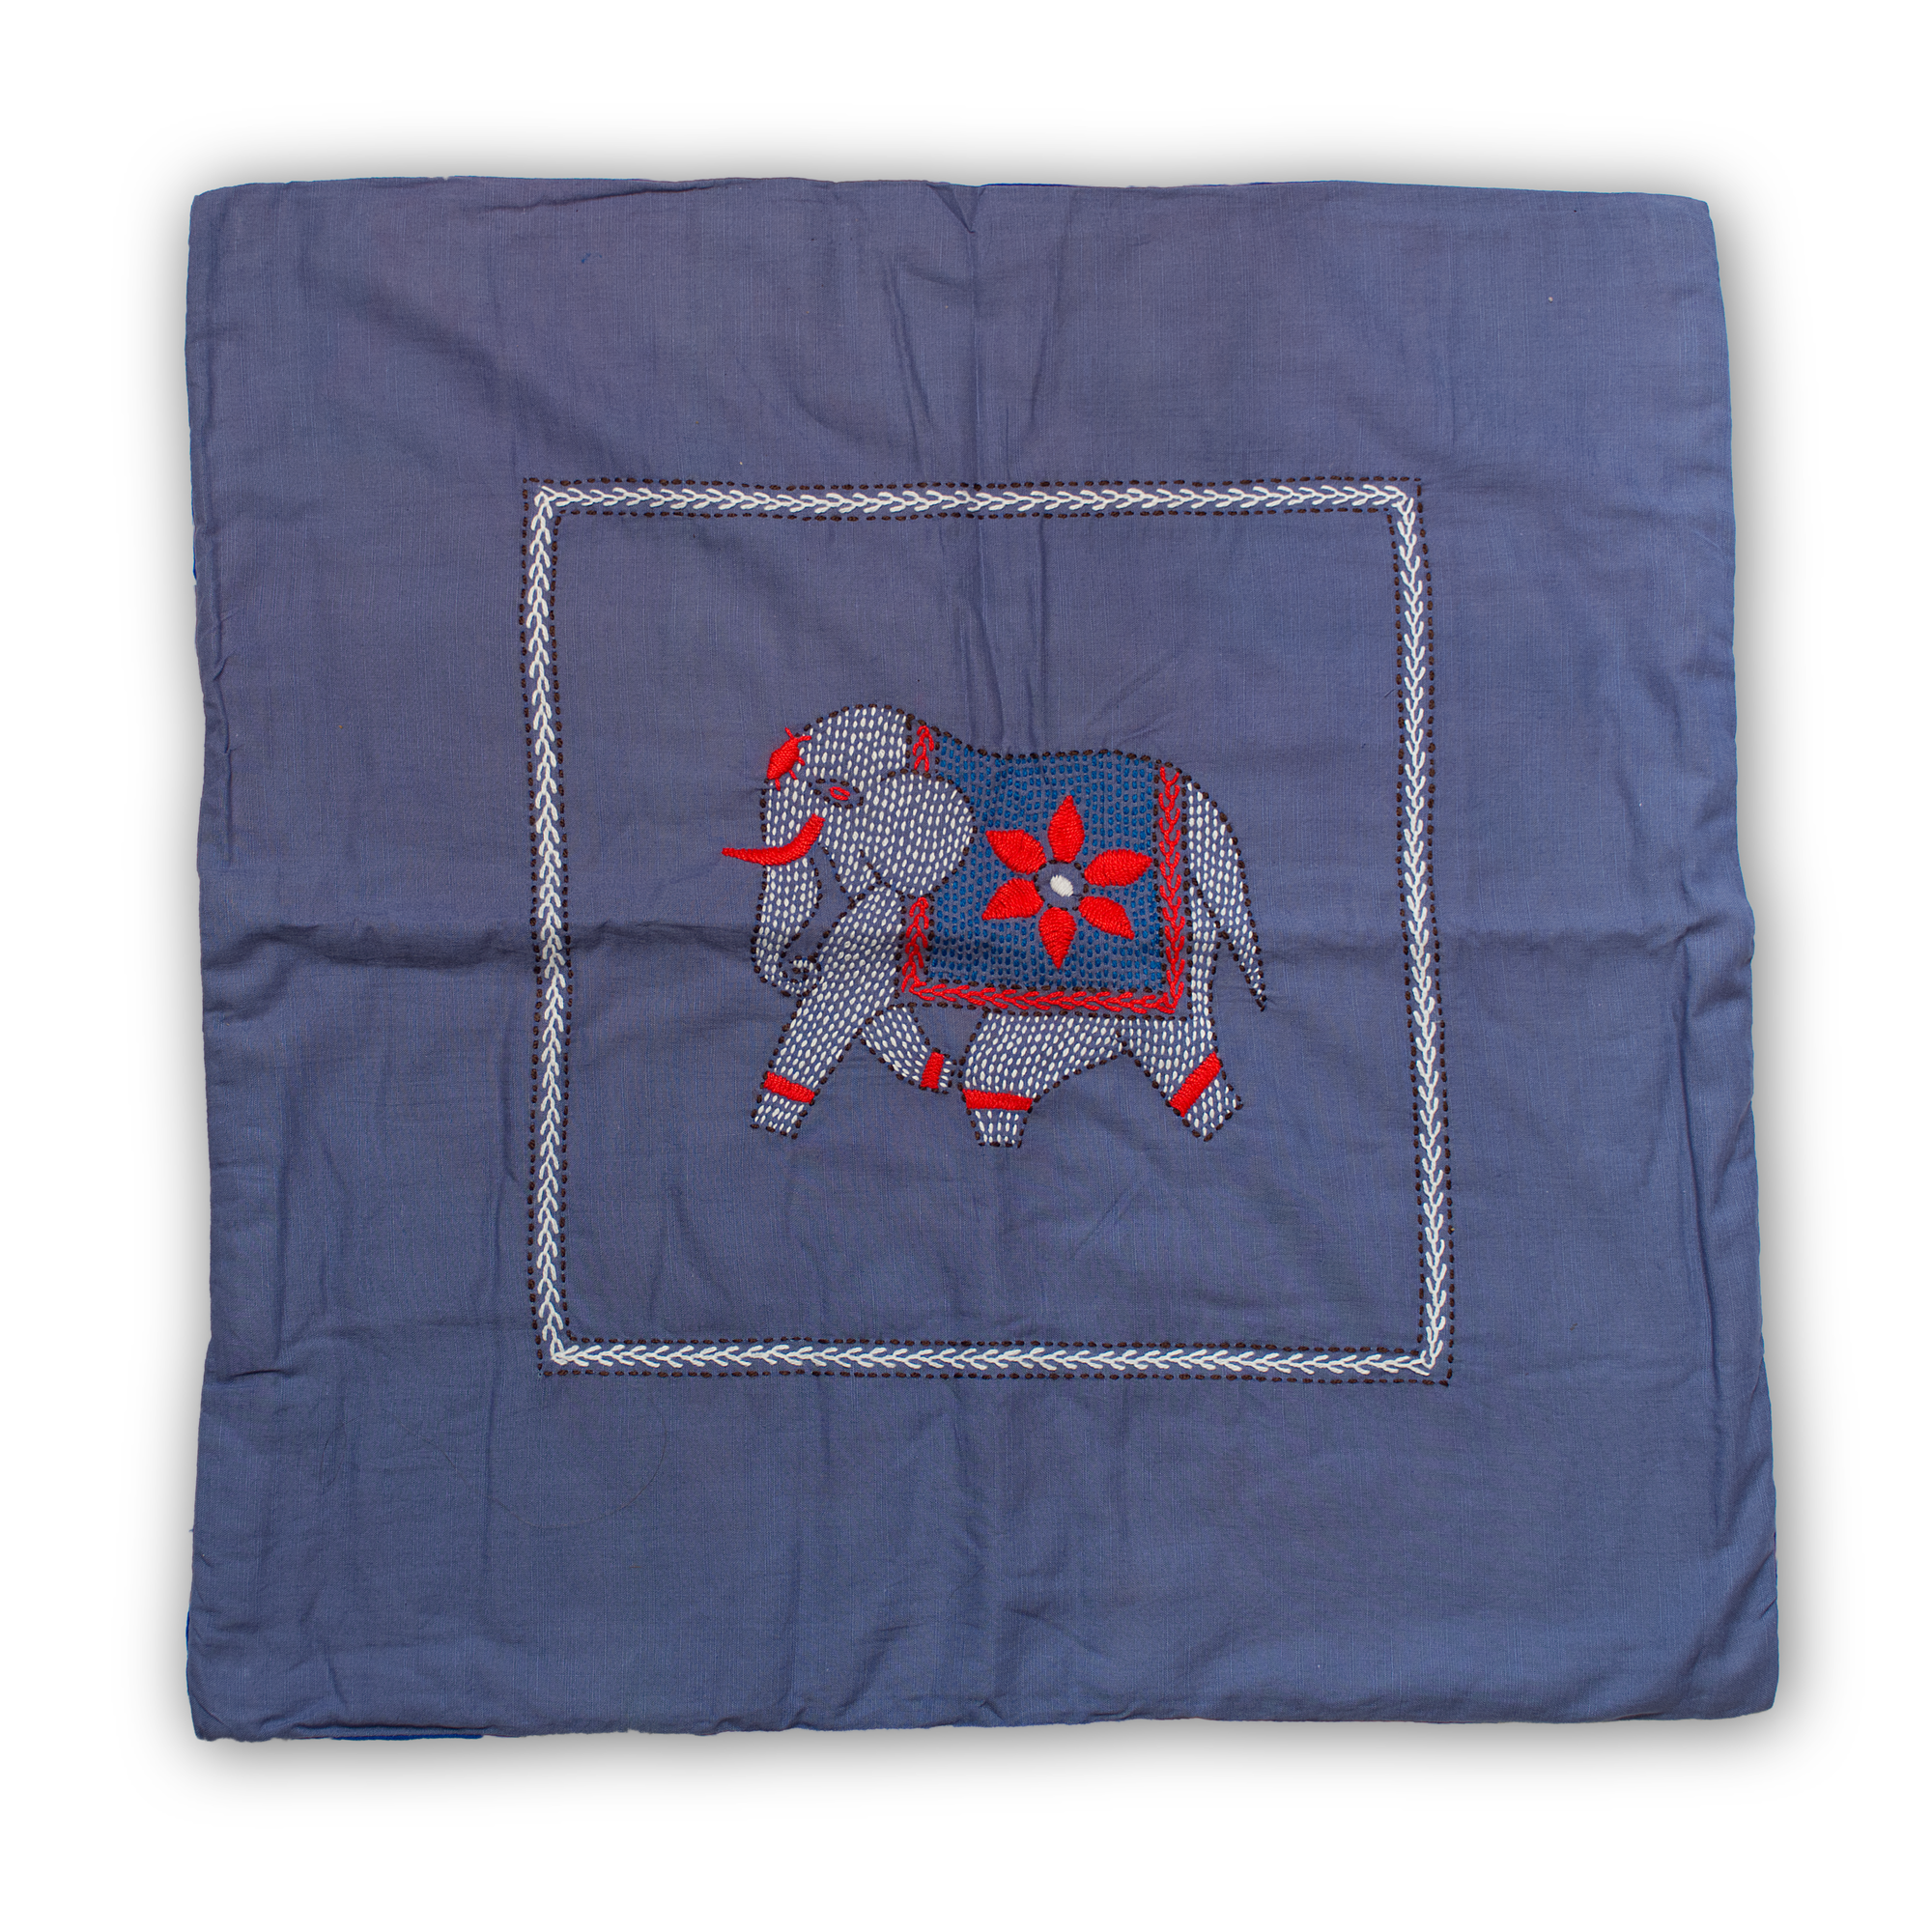 Cushion Covers - Dinajpur (elephant) Design - Sneha (Grey)